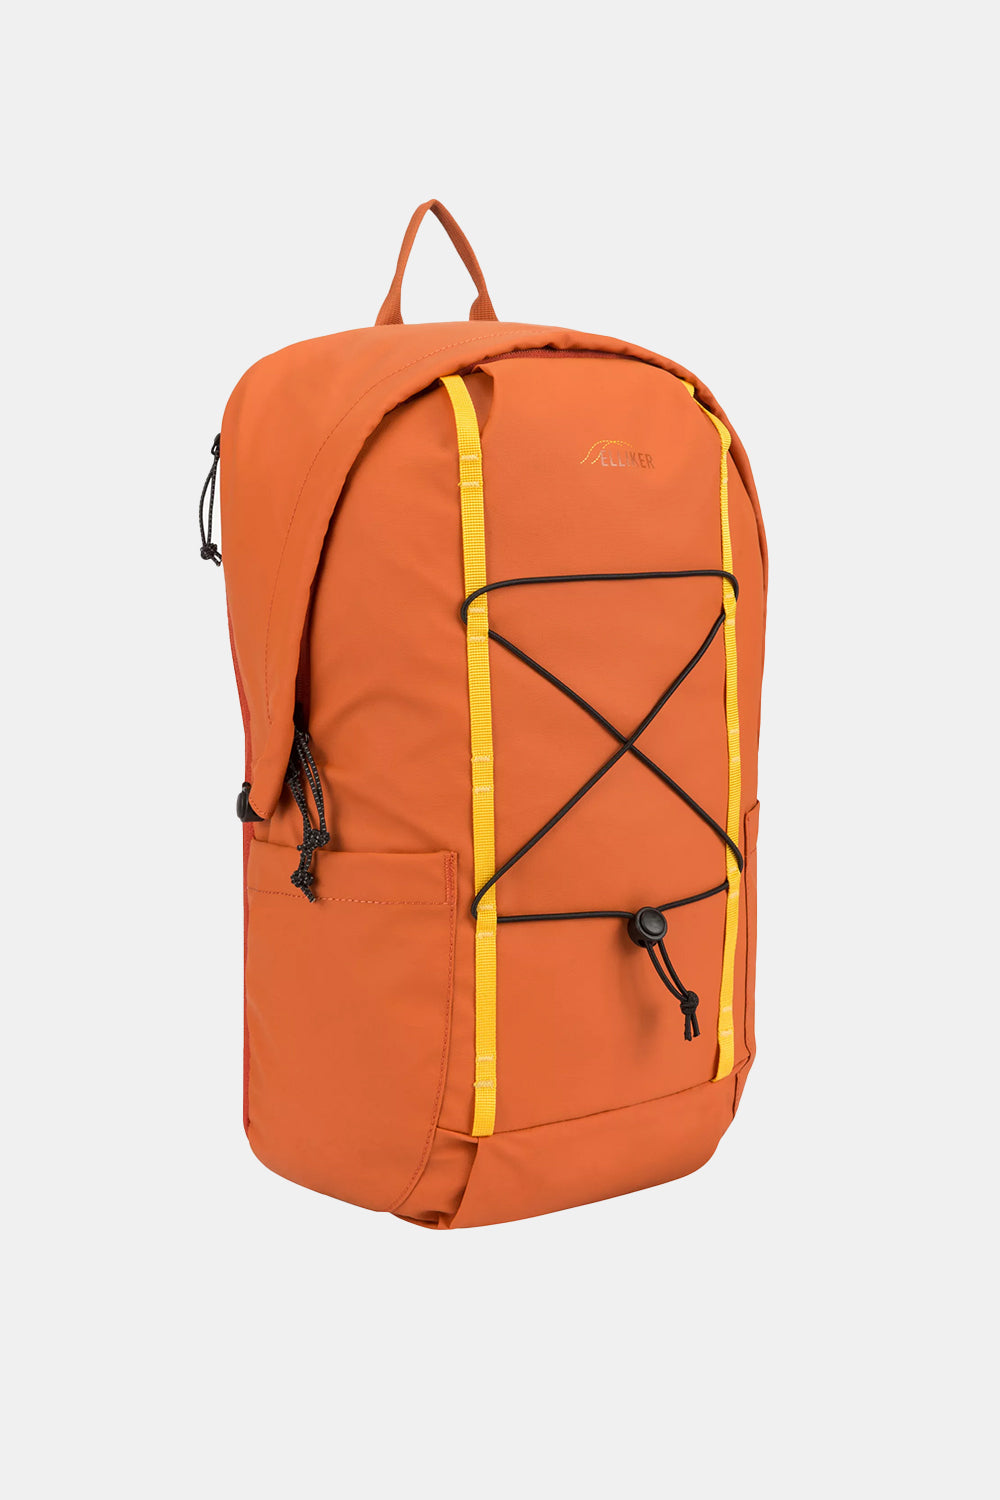 Elliker Kiln Hooded Zip Top Backpack 22L (Orange)
